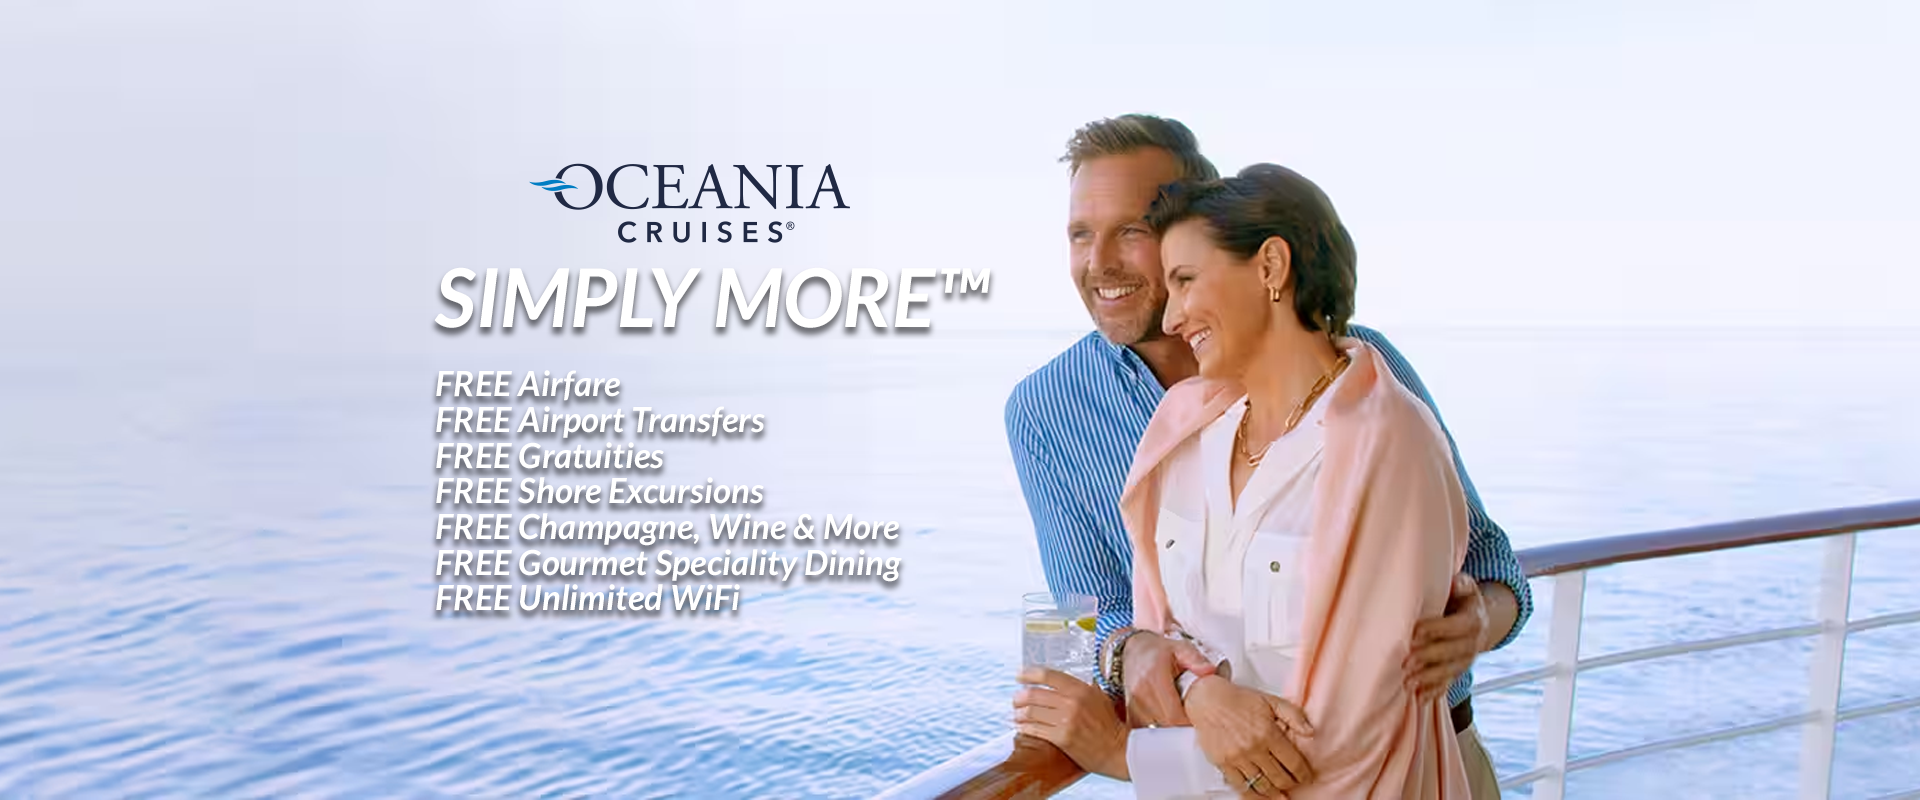 oceania cruise simply more